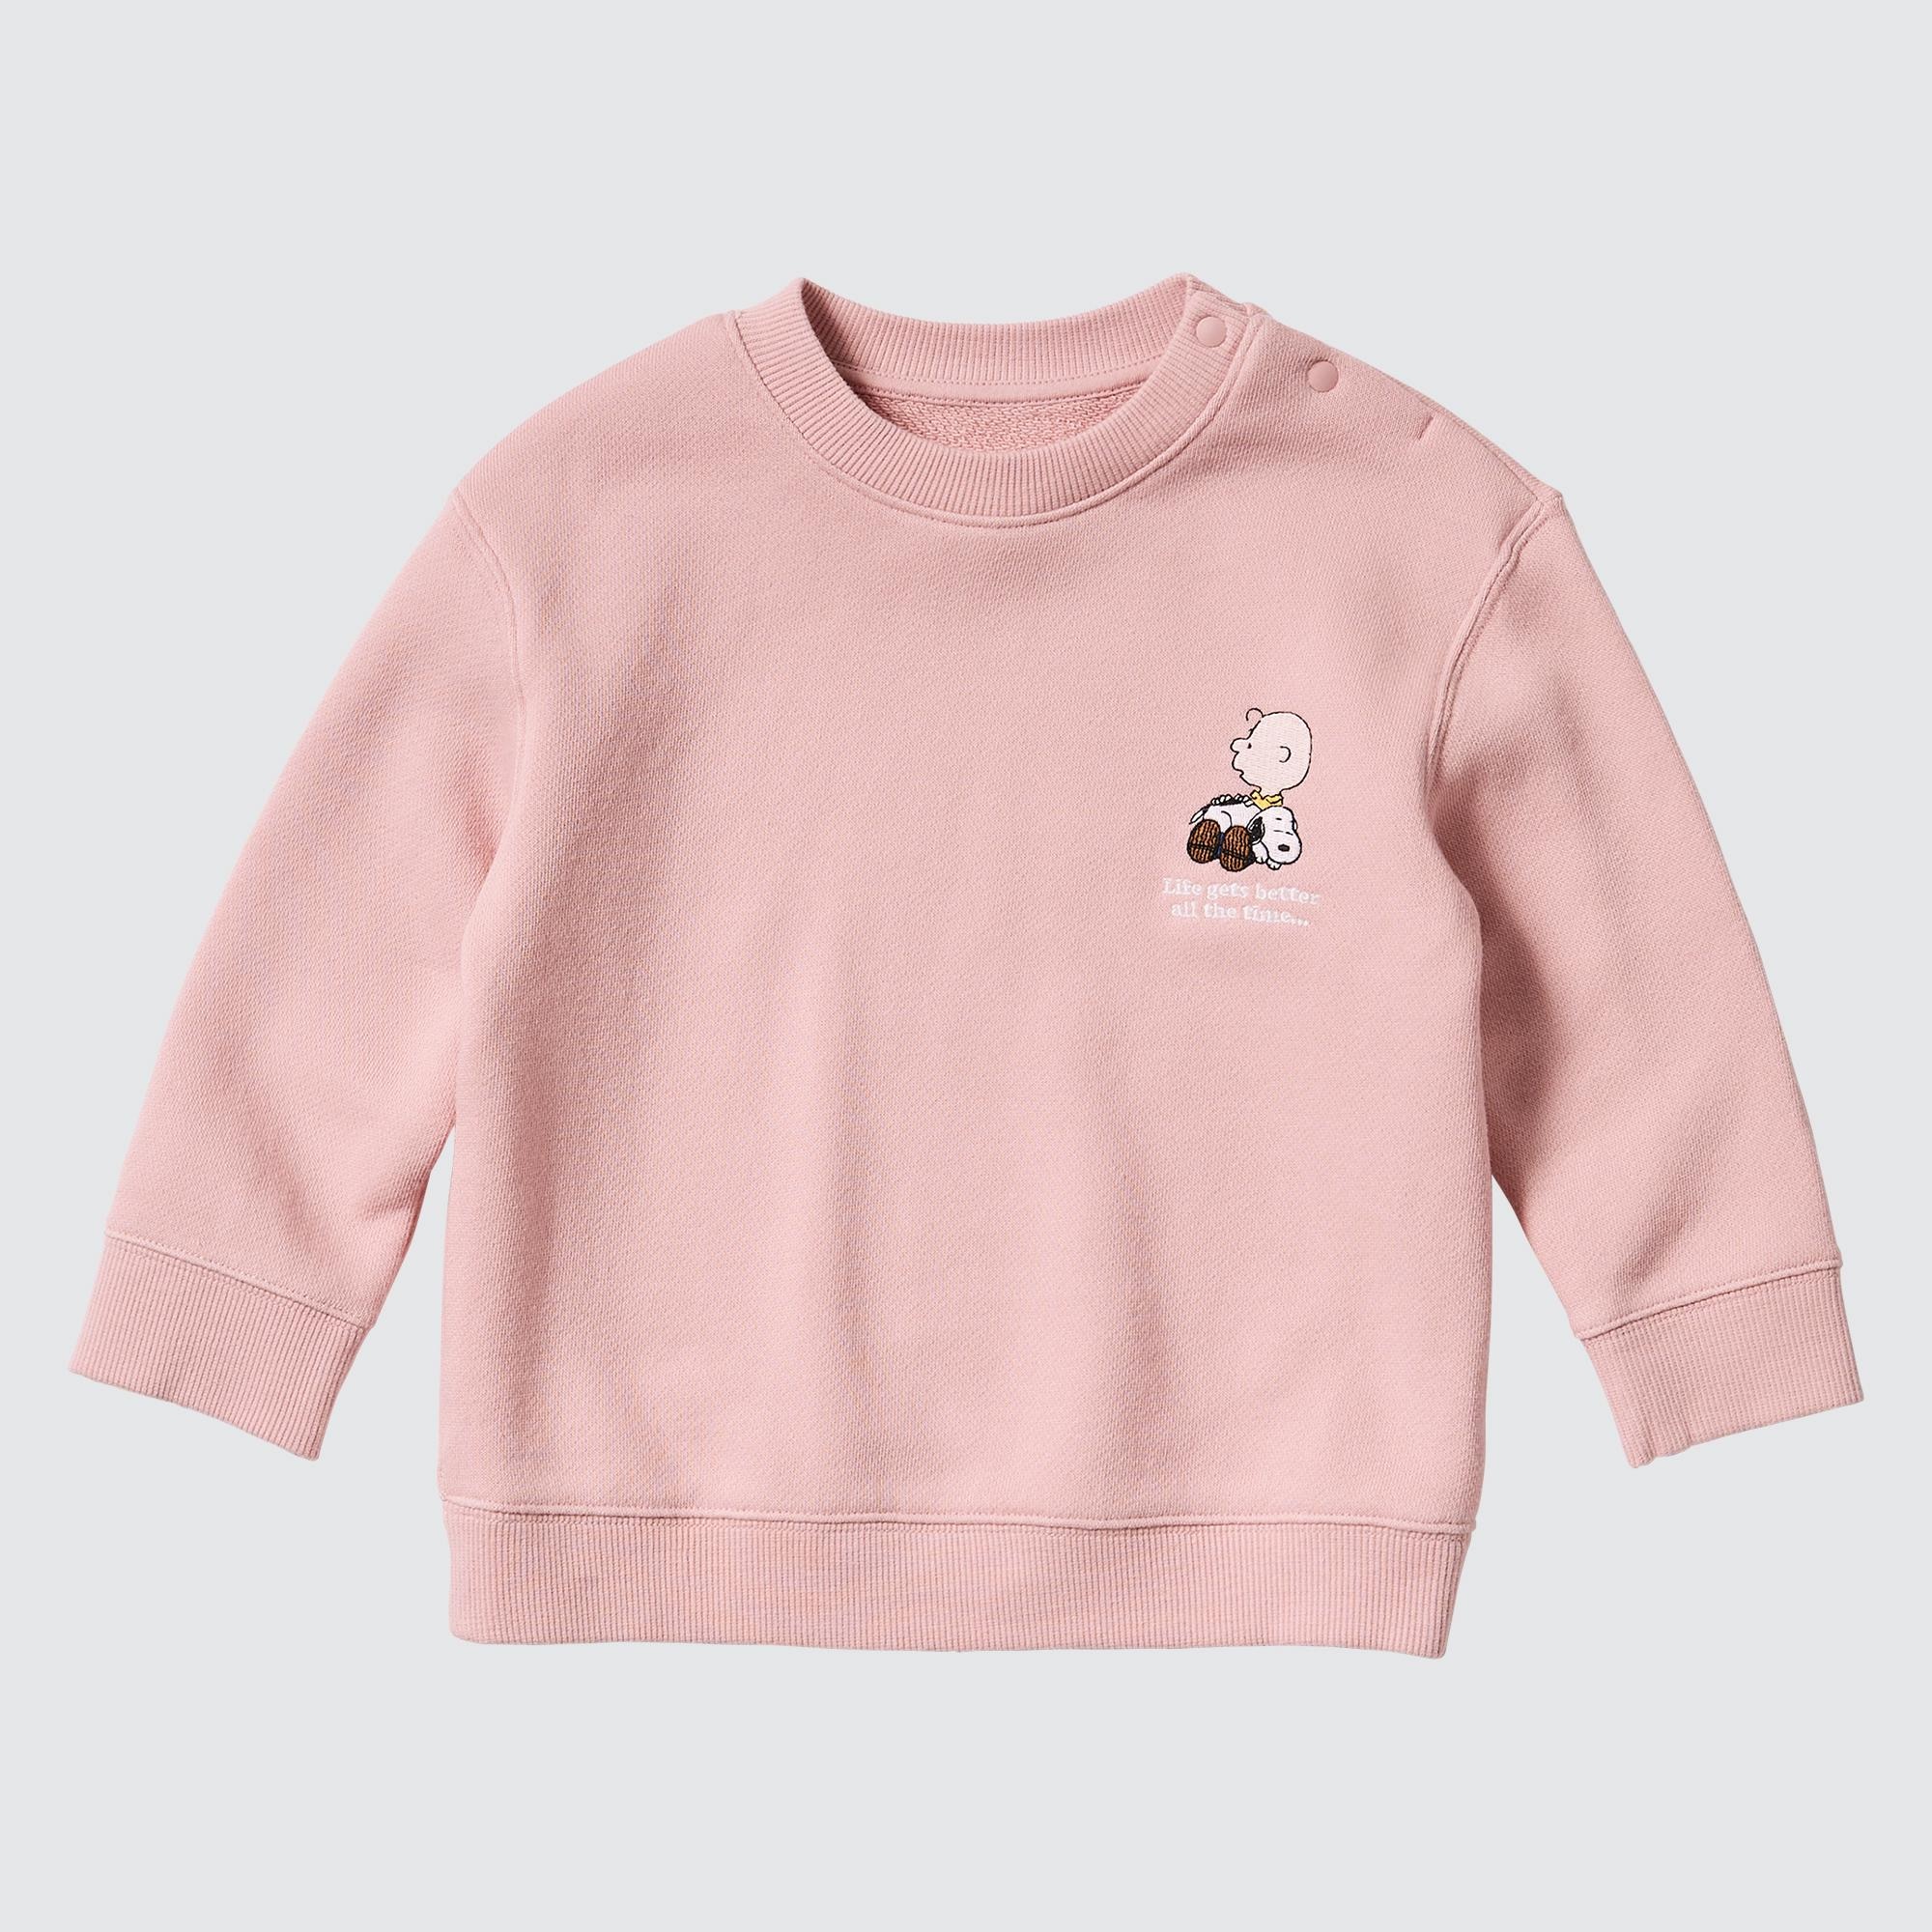 UNIQLO Peanuts Long-Sleeve Sweatshirt | StyleHint